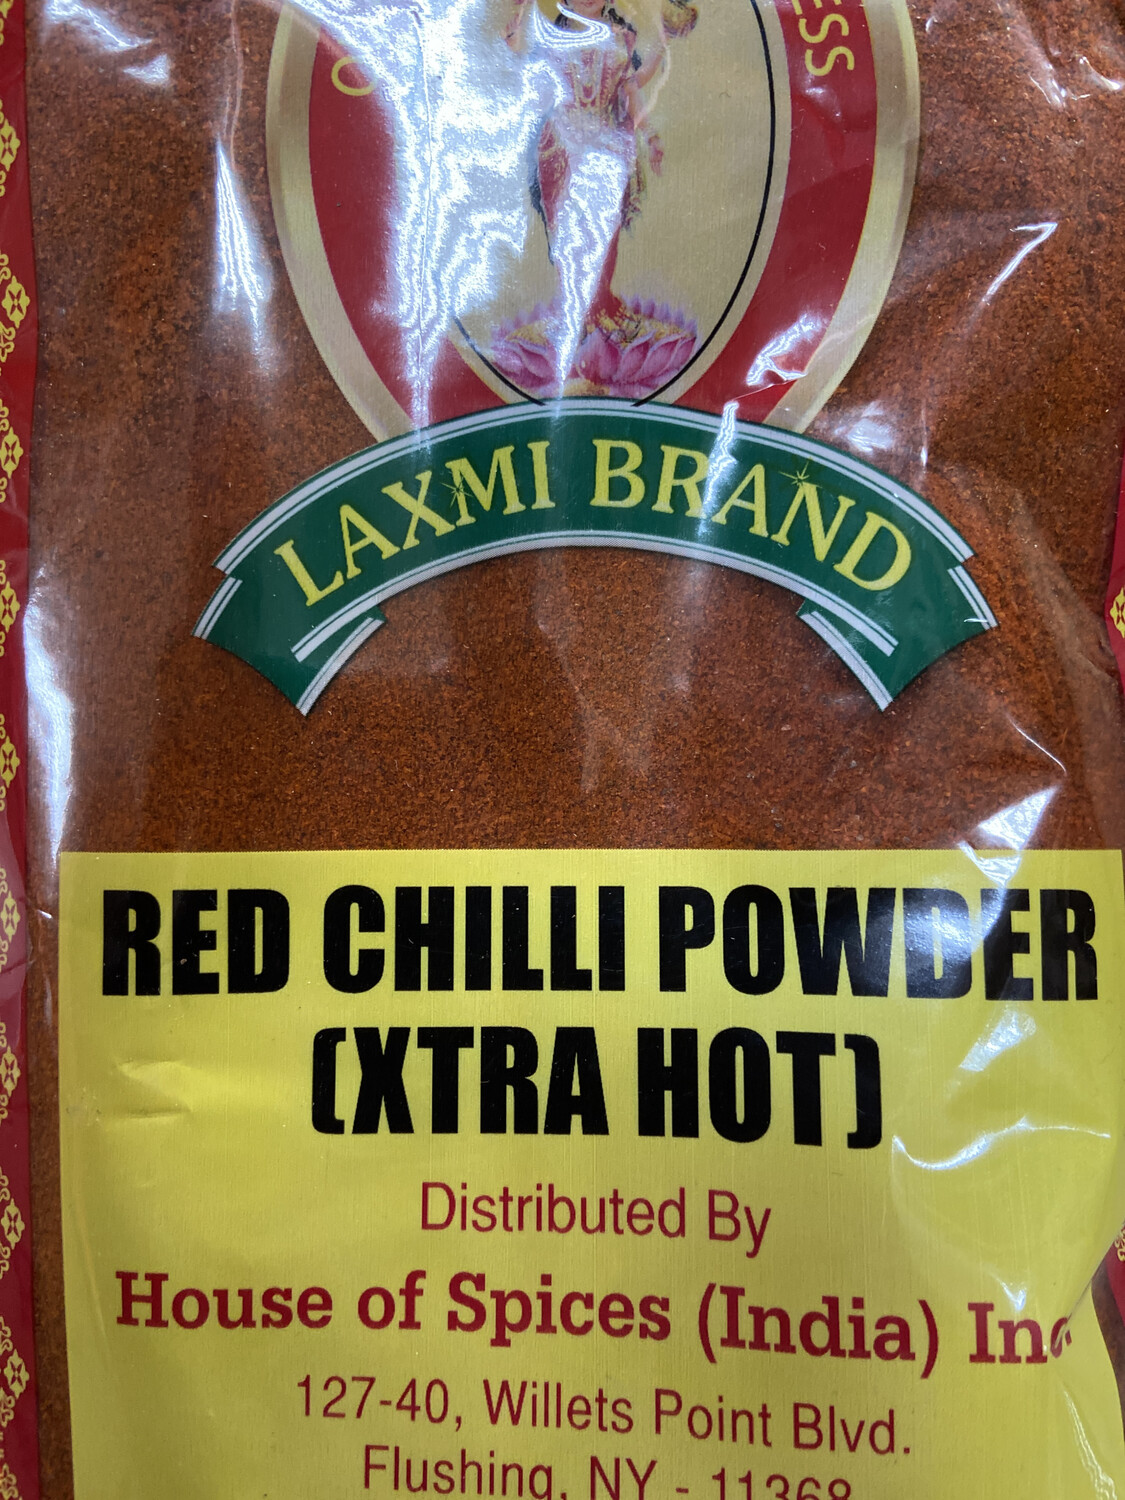 Laxmi Red Chilli Powder Extra Hot 14oz